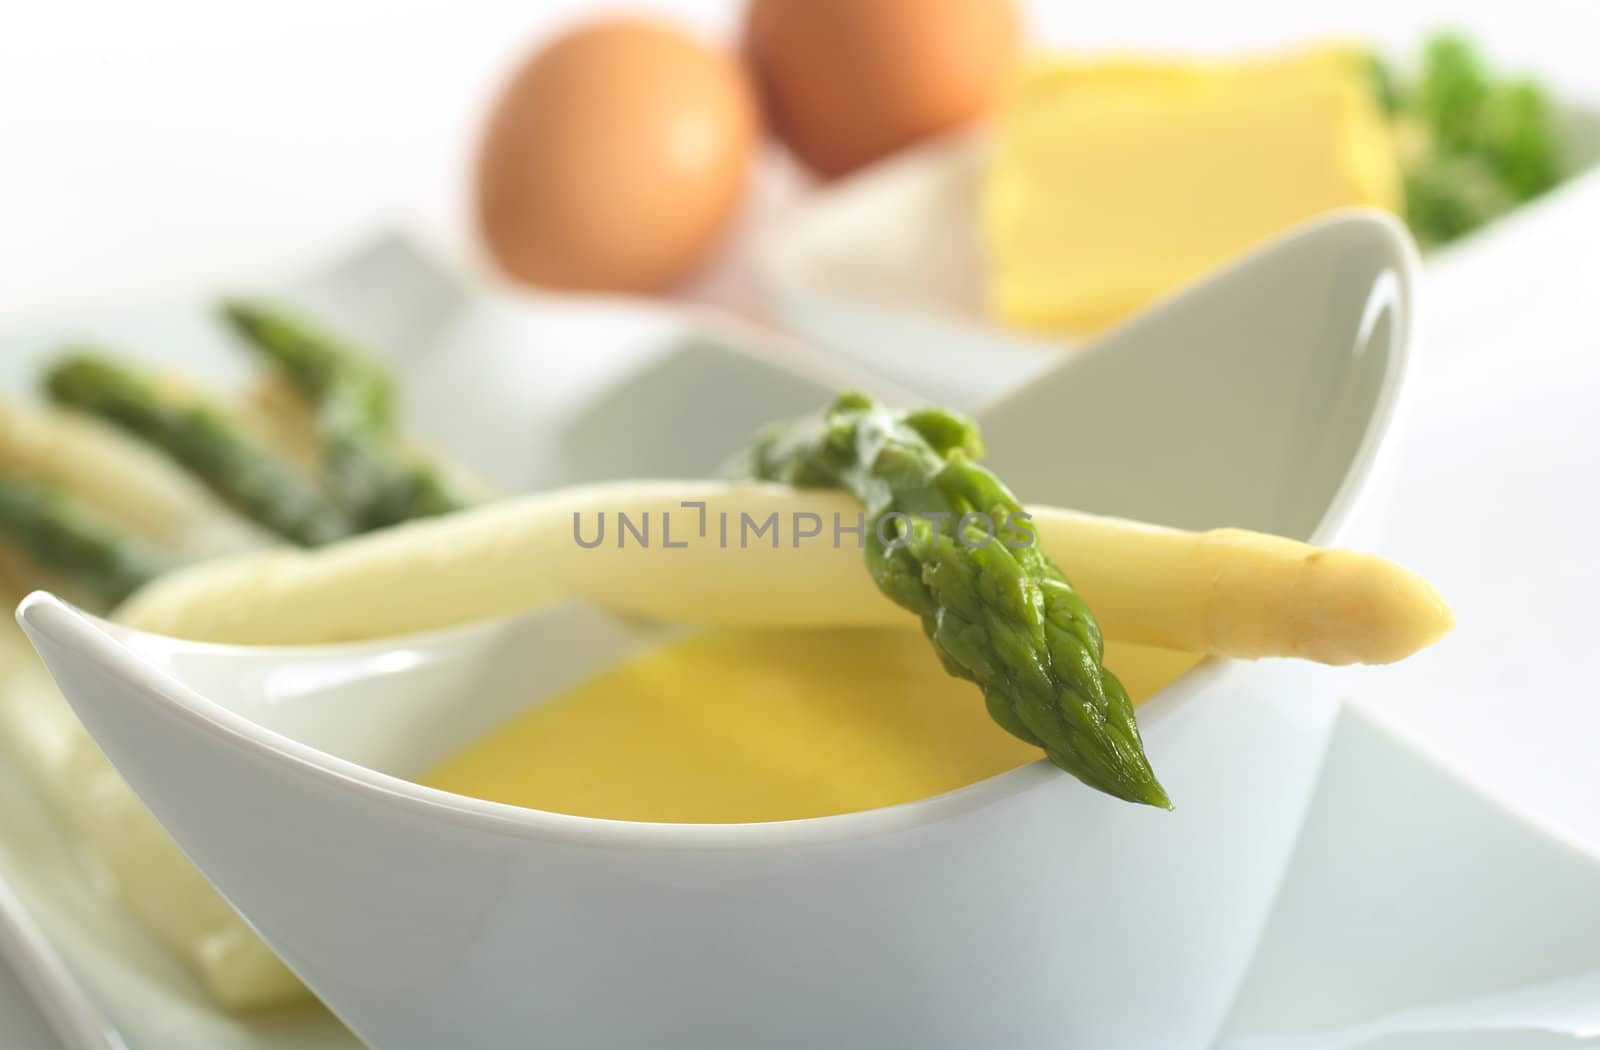 Asparagus lying on a bowl full of Hollandaise sauce (Very Shallow Depth of Field, Focus on the head of the green asparagus)